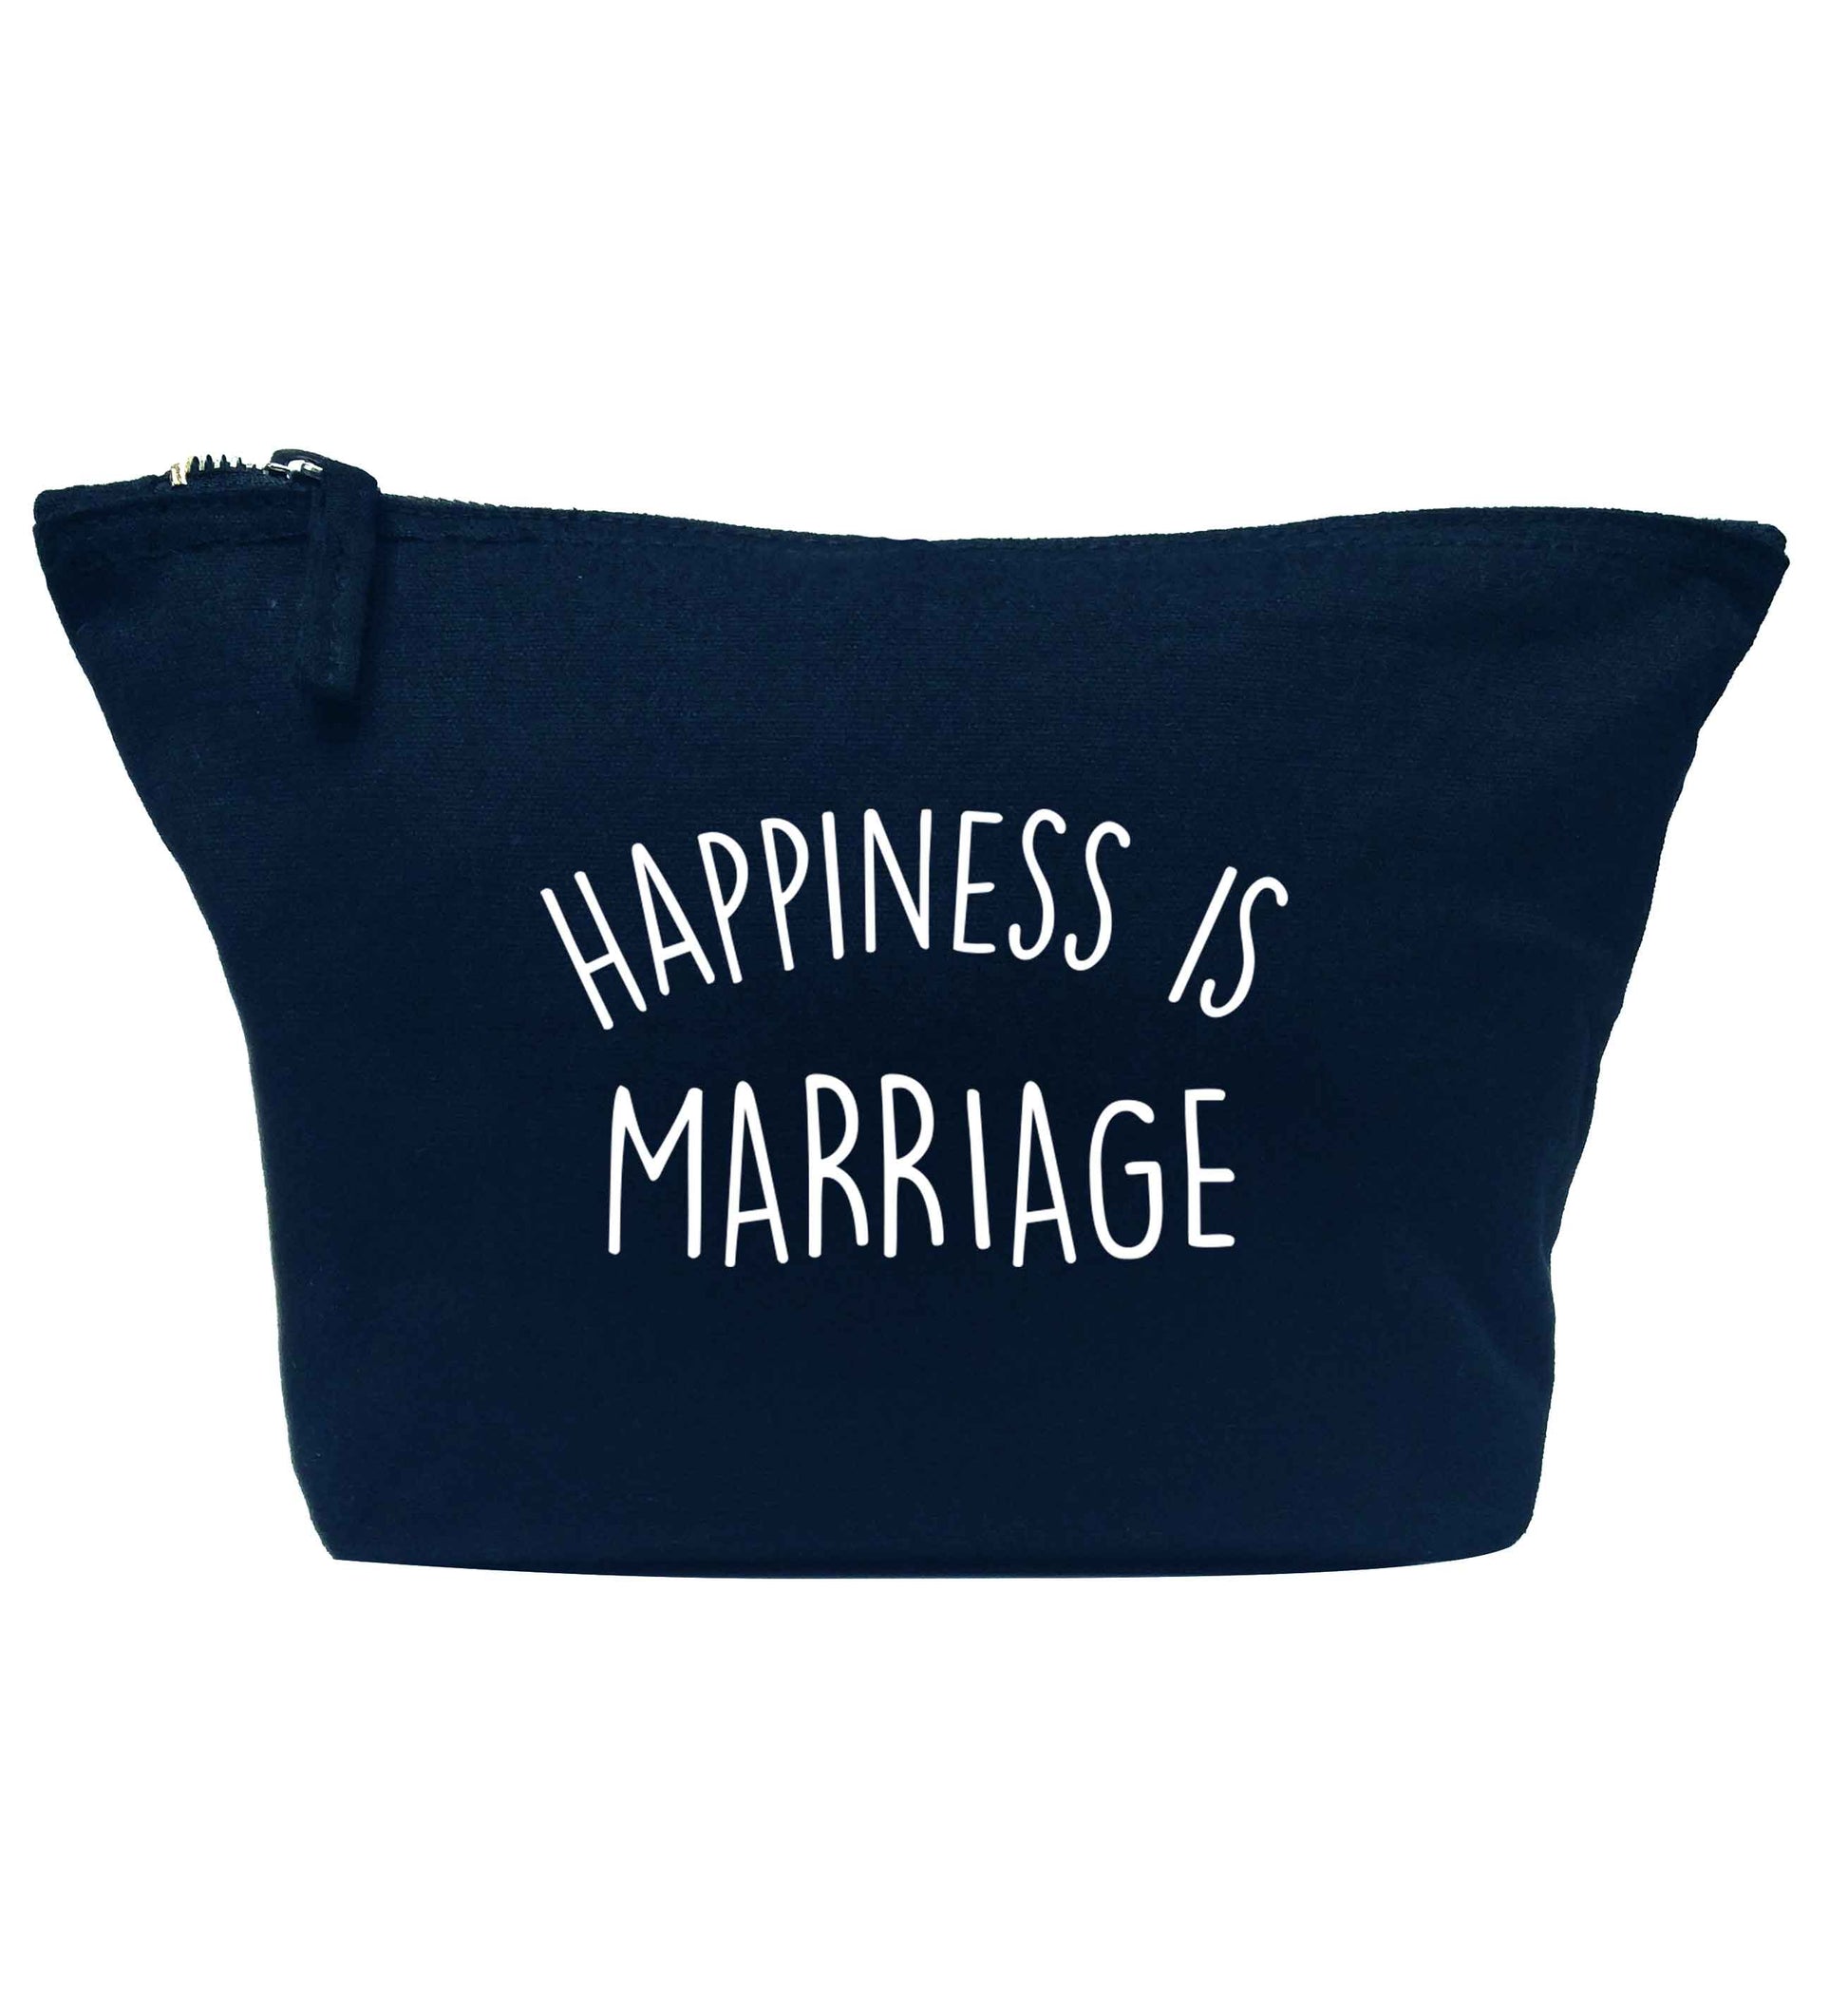 Happiness is wedding planning navy makeup bag